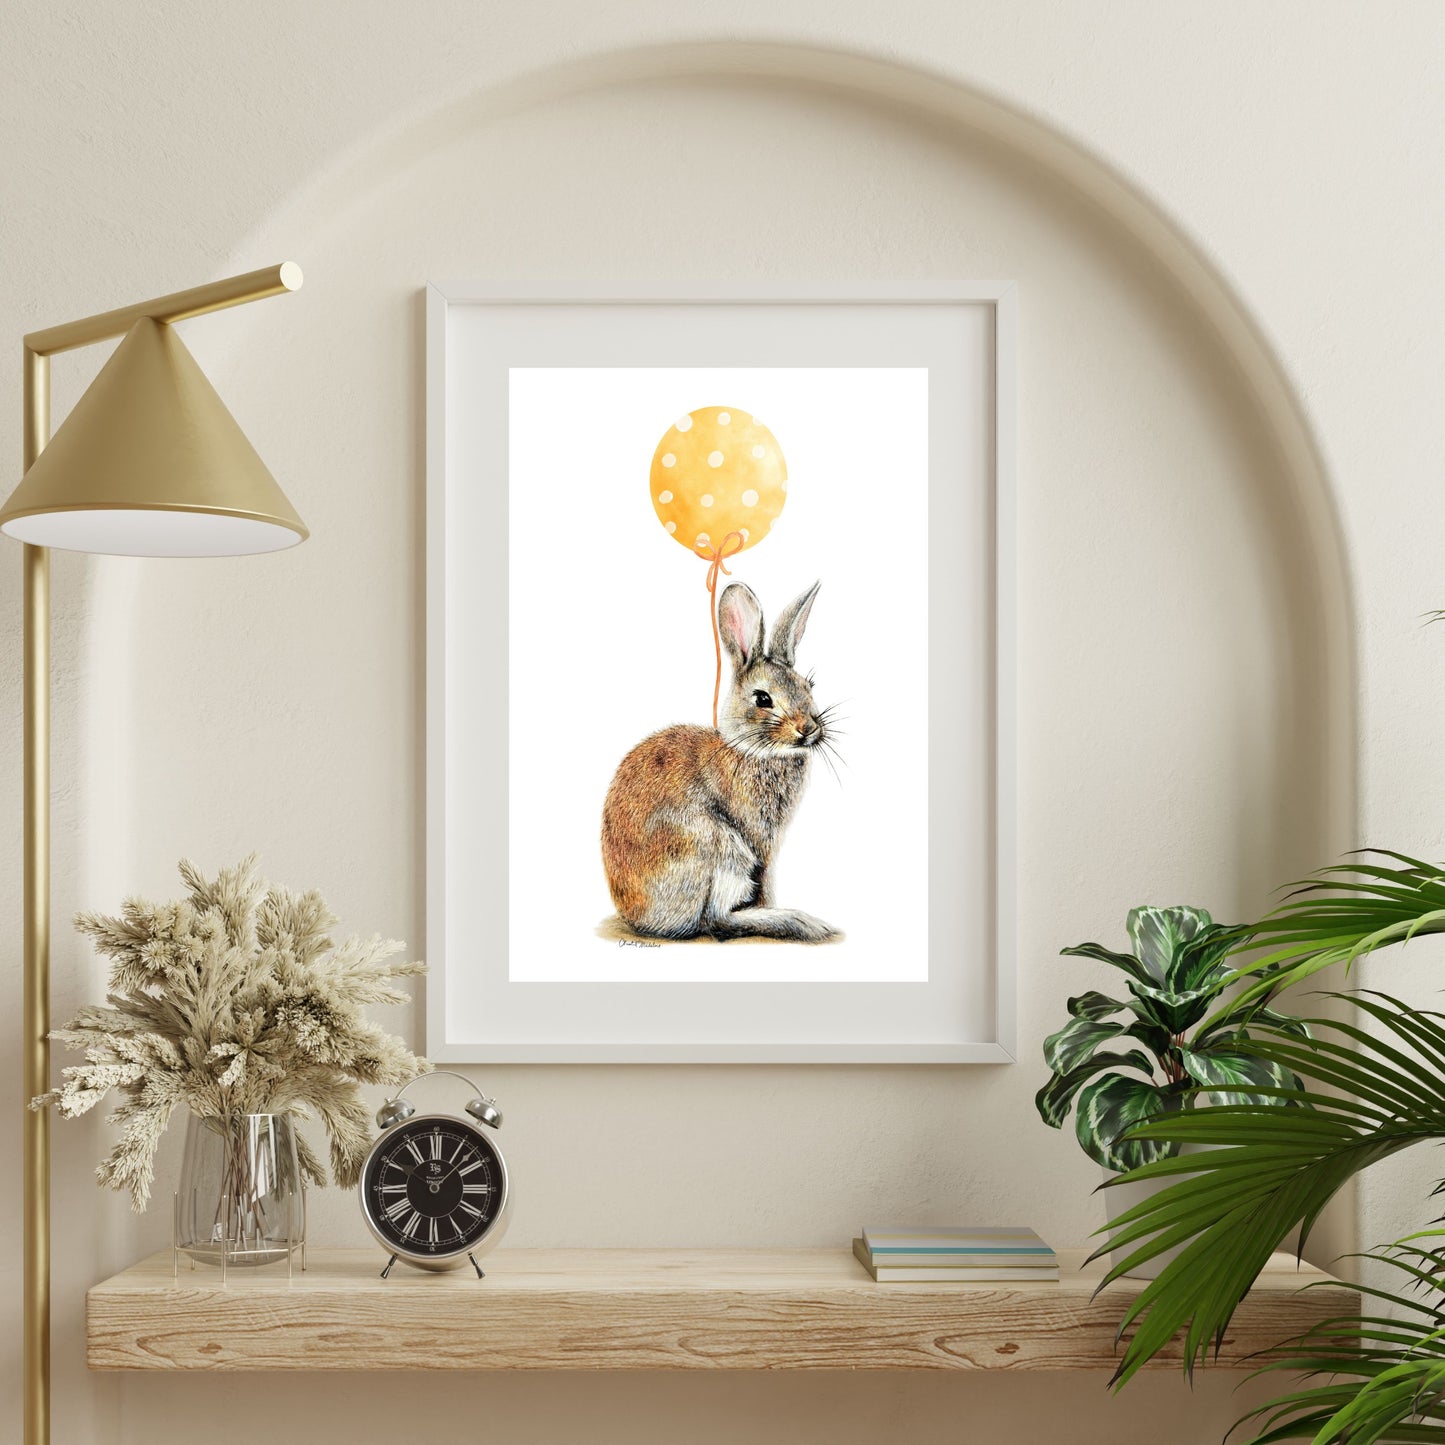 Bunny With Yellow Balloon, Woodland nursery art, Giclee print on fine art paper